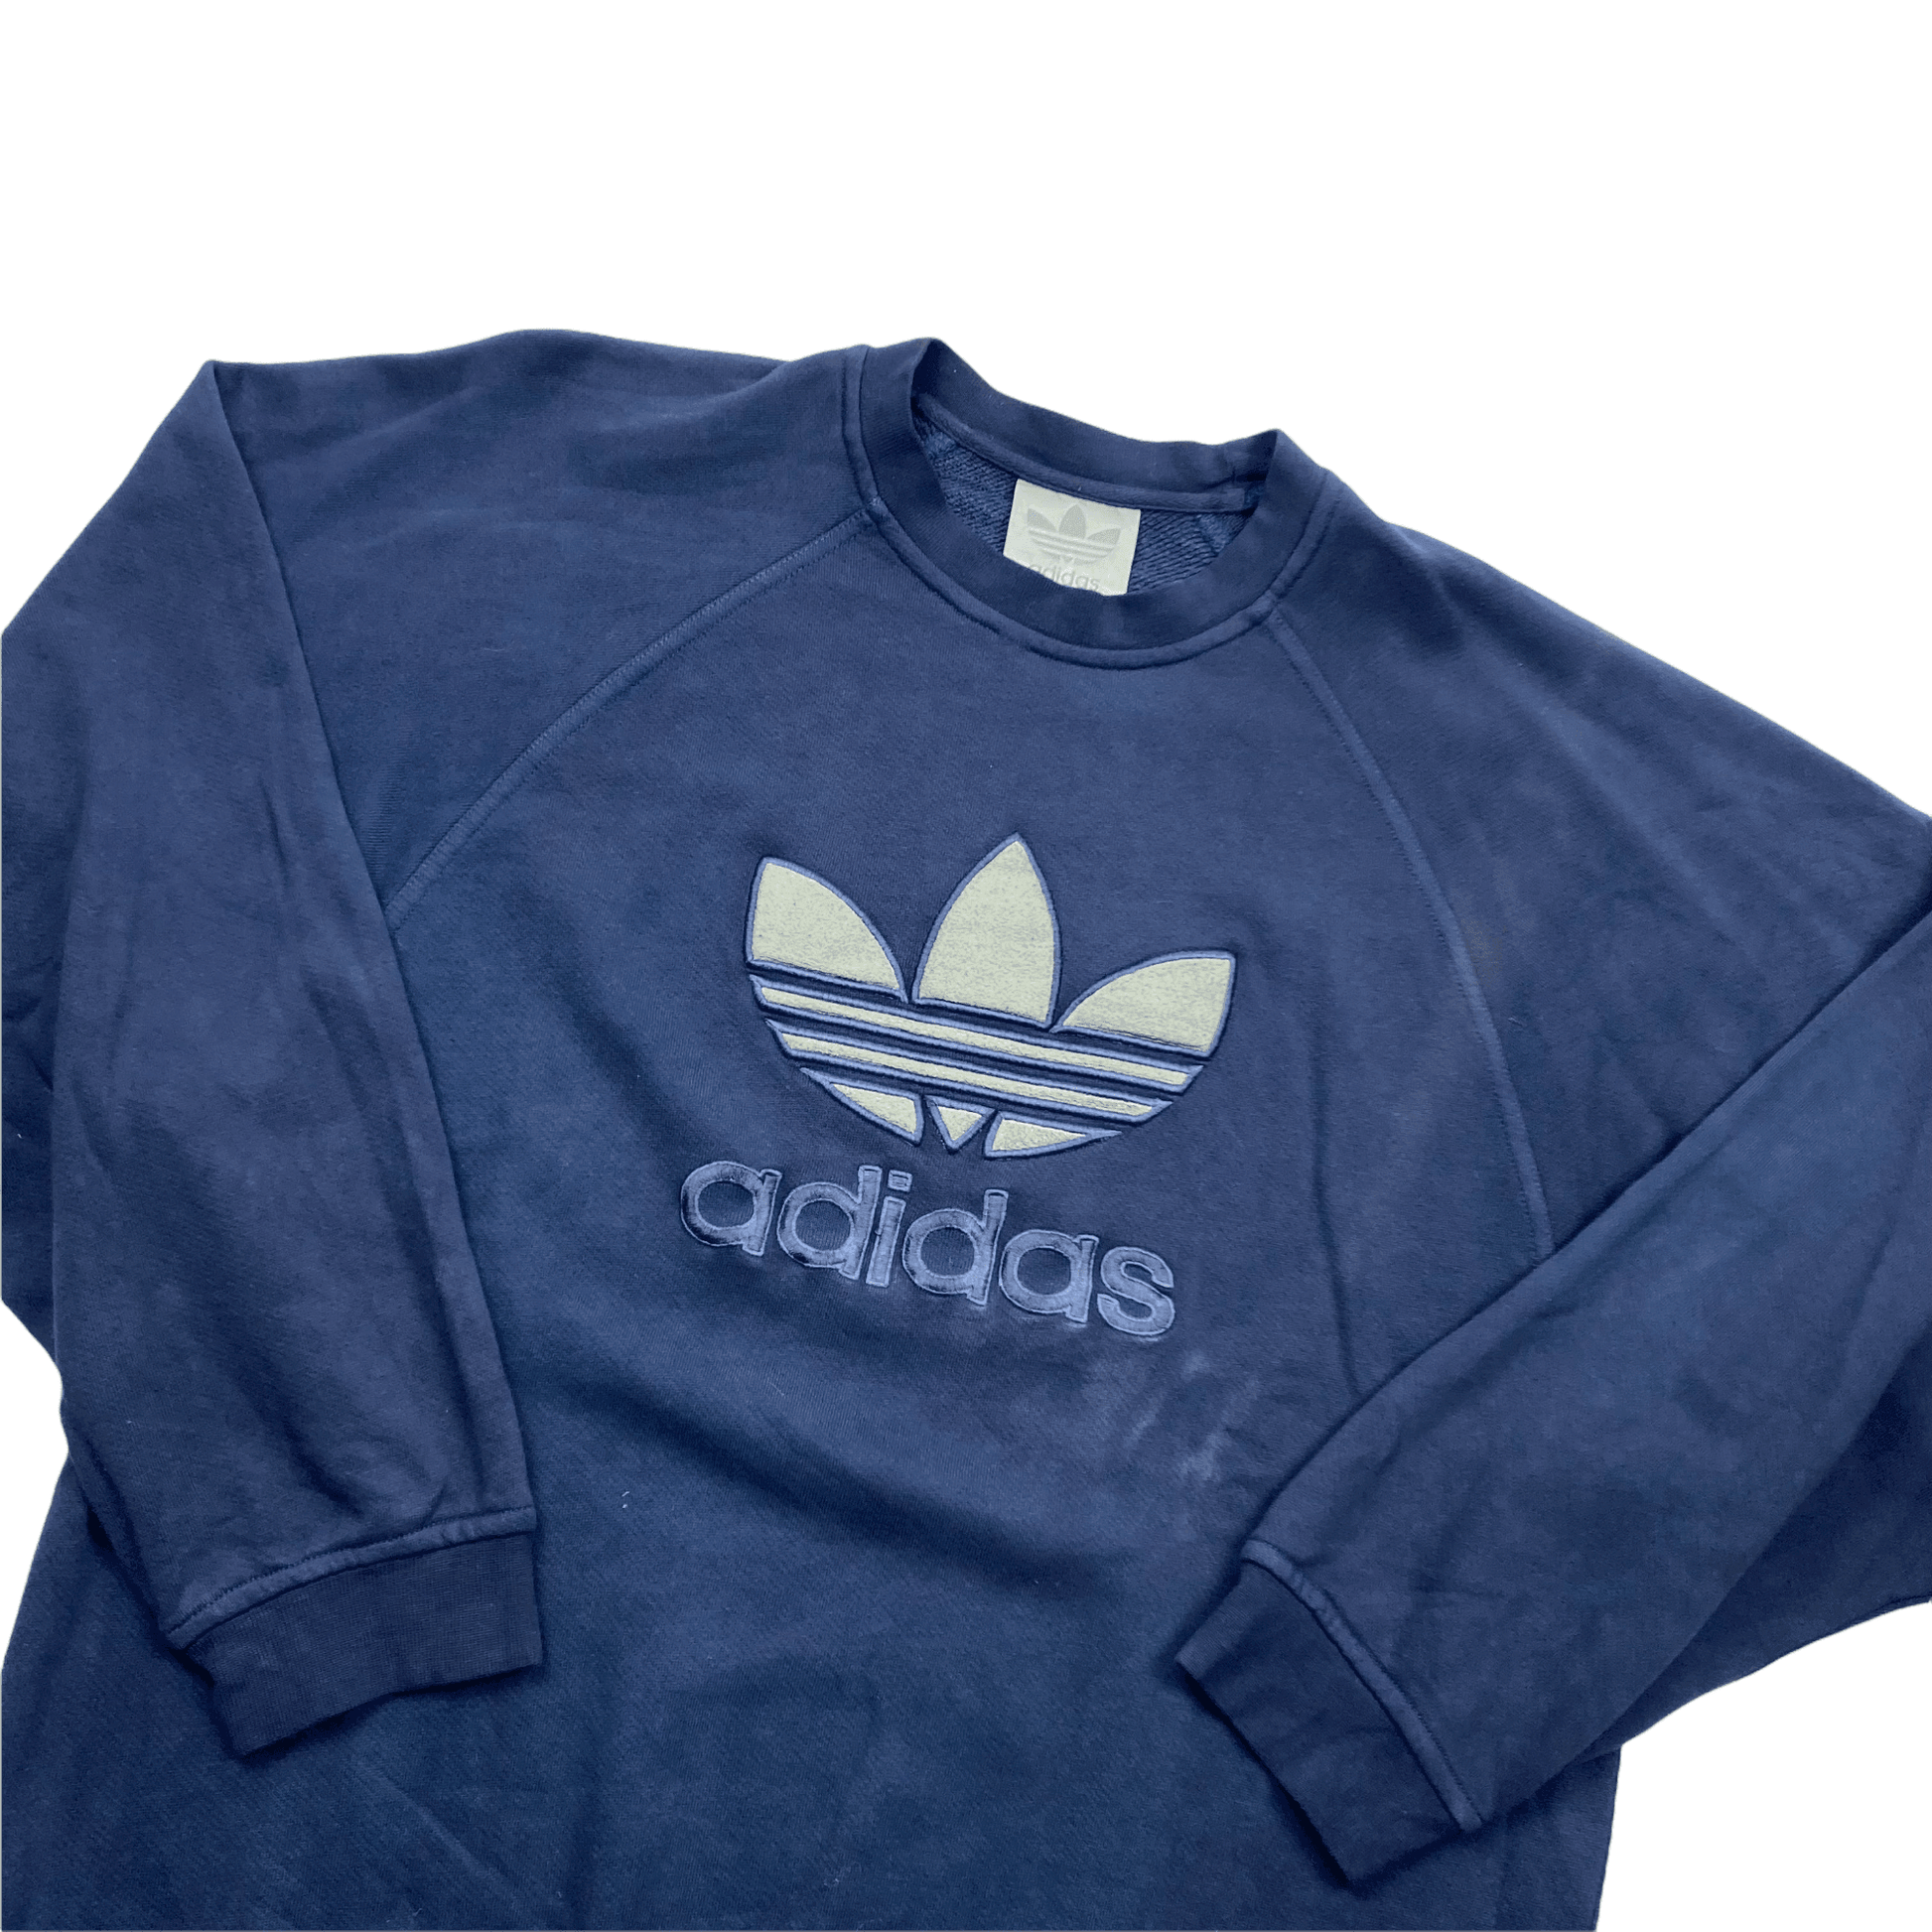 Vintage 90s Navy Blue Adidas Spell-Out Sweatshirt - Large - The Streetwear Studio